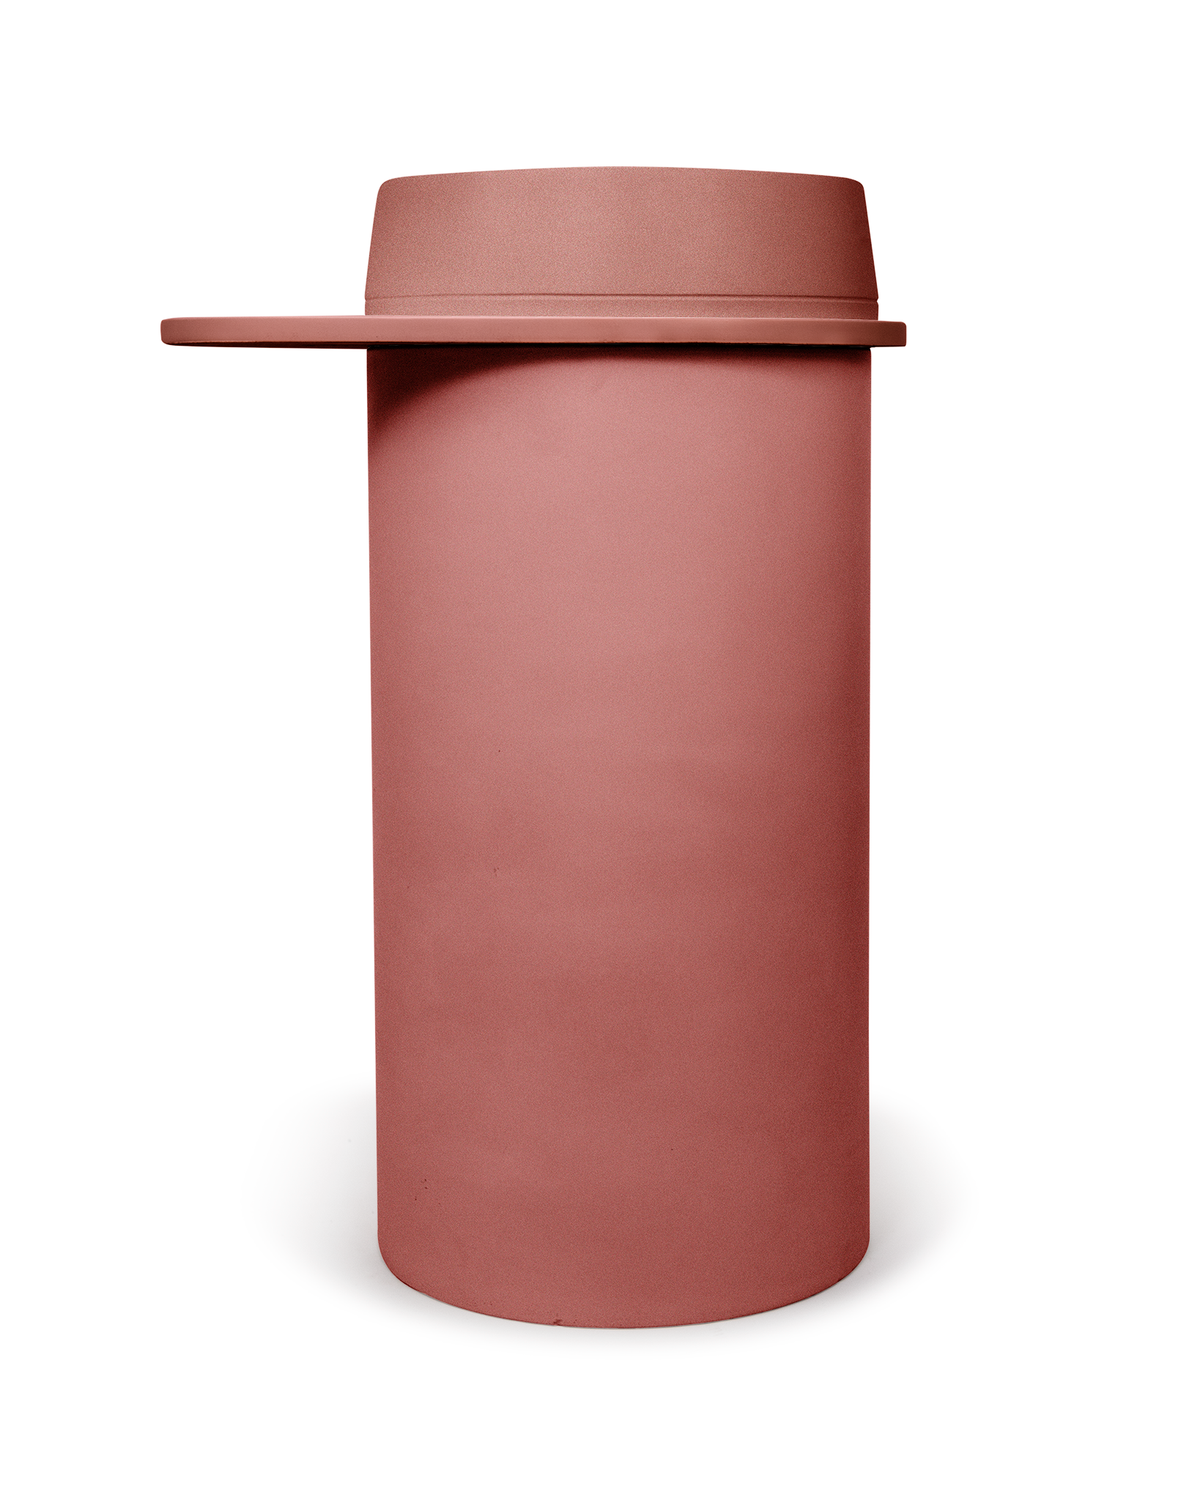 Cylinder - Funl Basin (Musk)